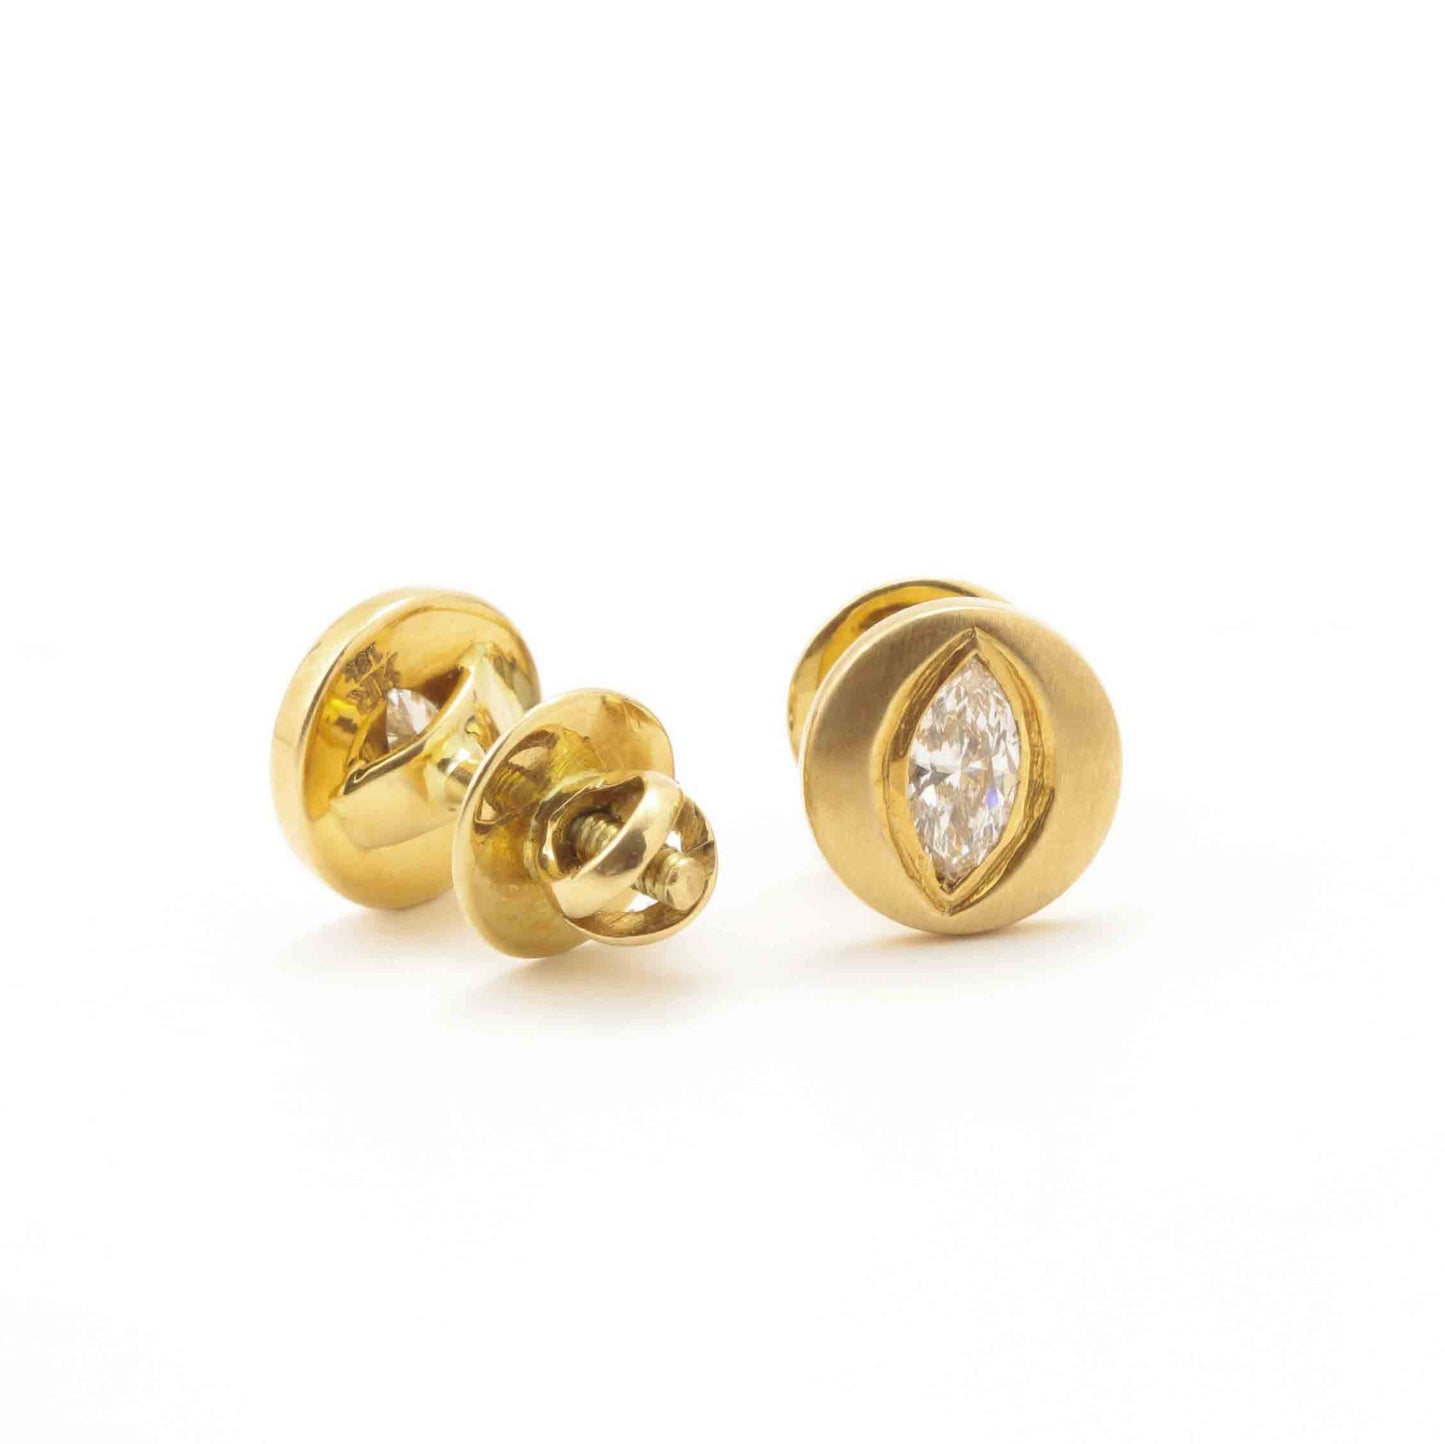 The Trinetra Gold and Diamond Ear Studs by Rasvihar